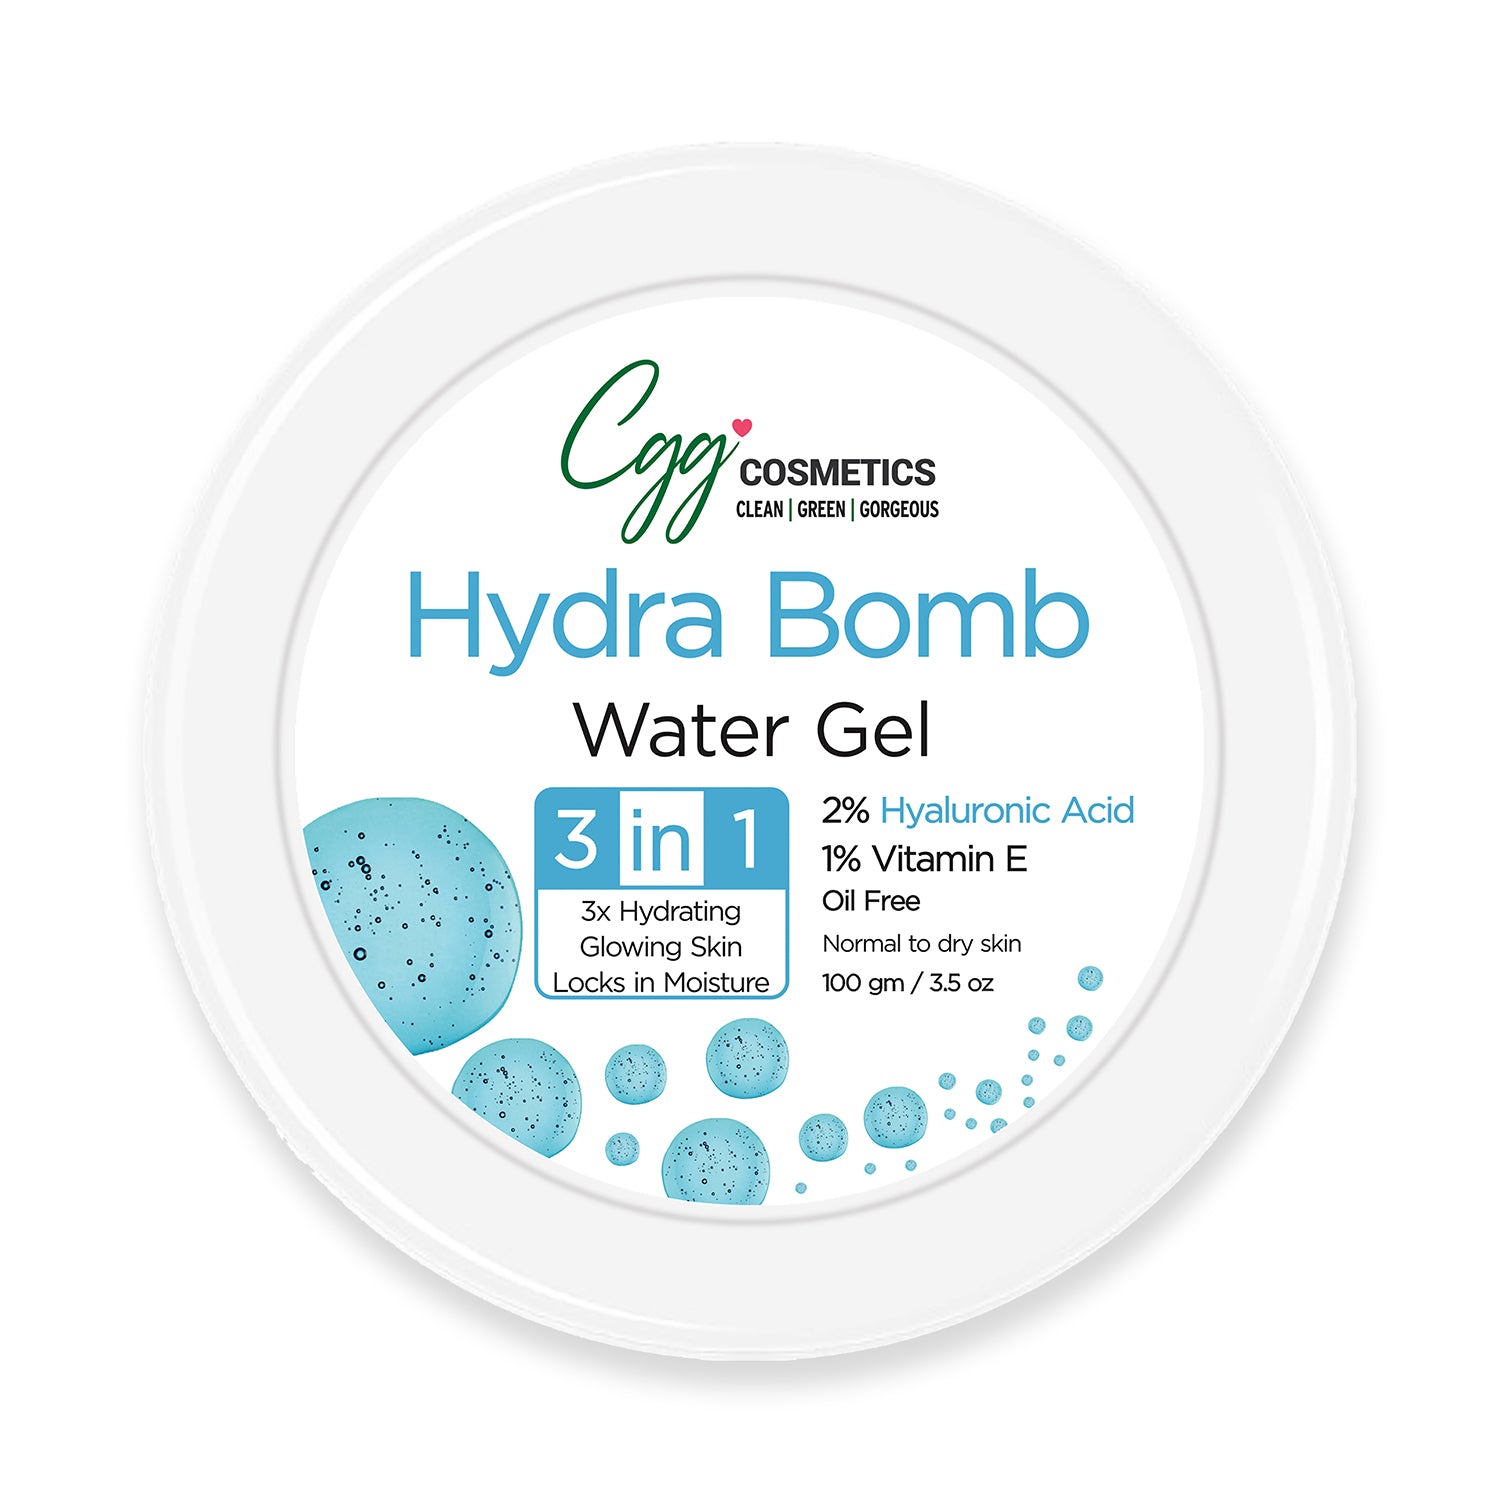 CGG Cosmetics Hydra Bomb Water Gel | 3-in-1 Hydrating, Glowing Skin & Locks in Moisture – 100gm